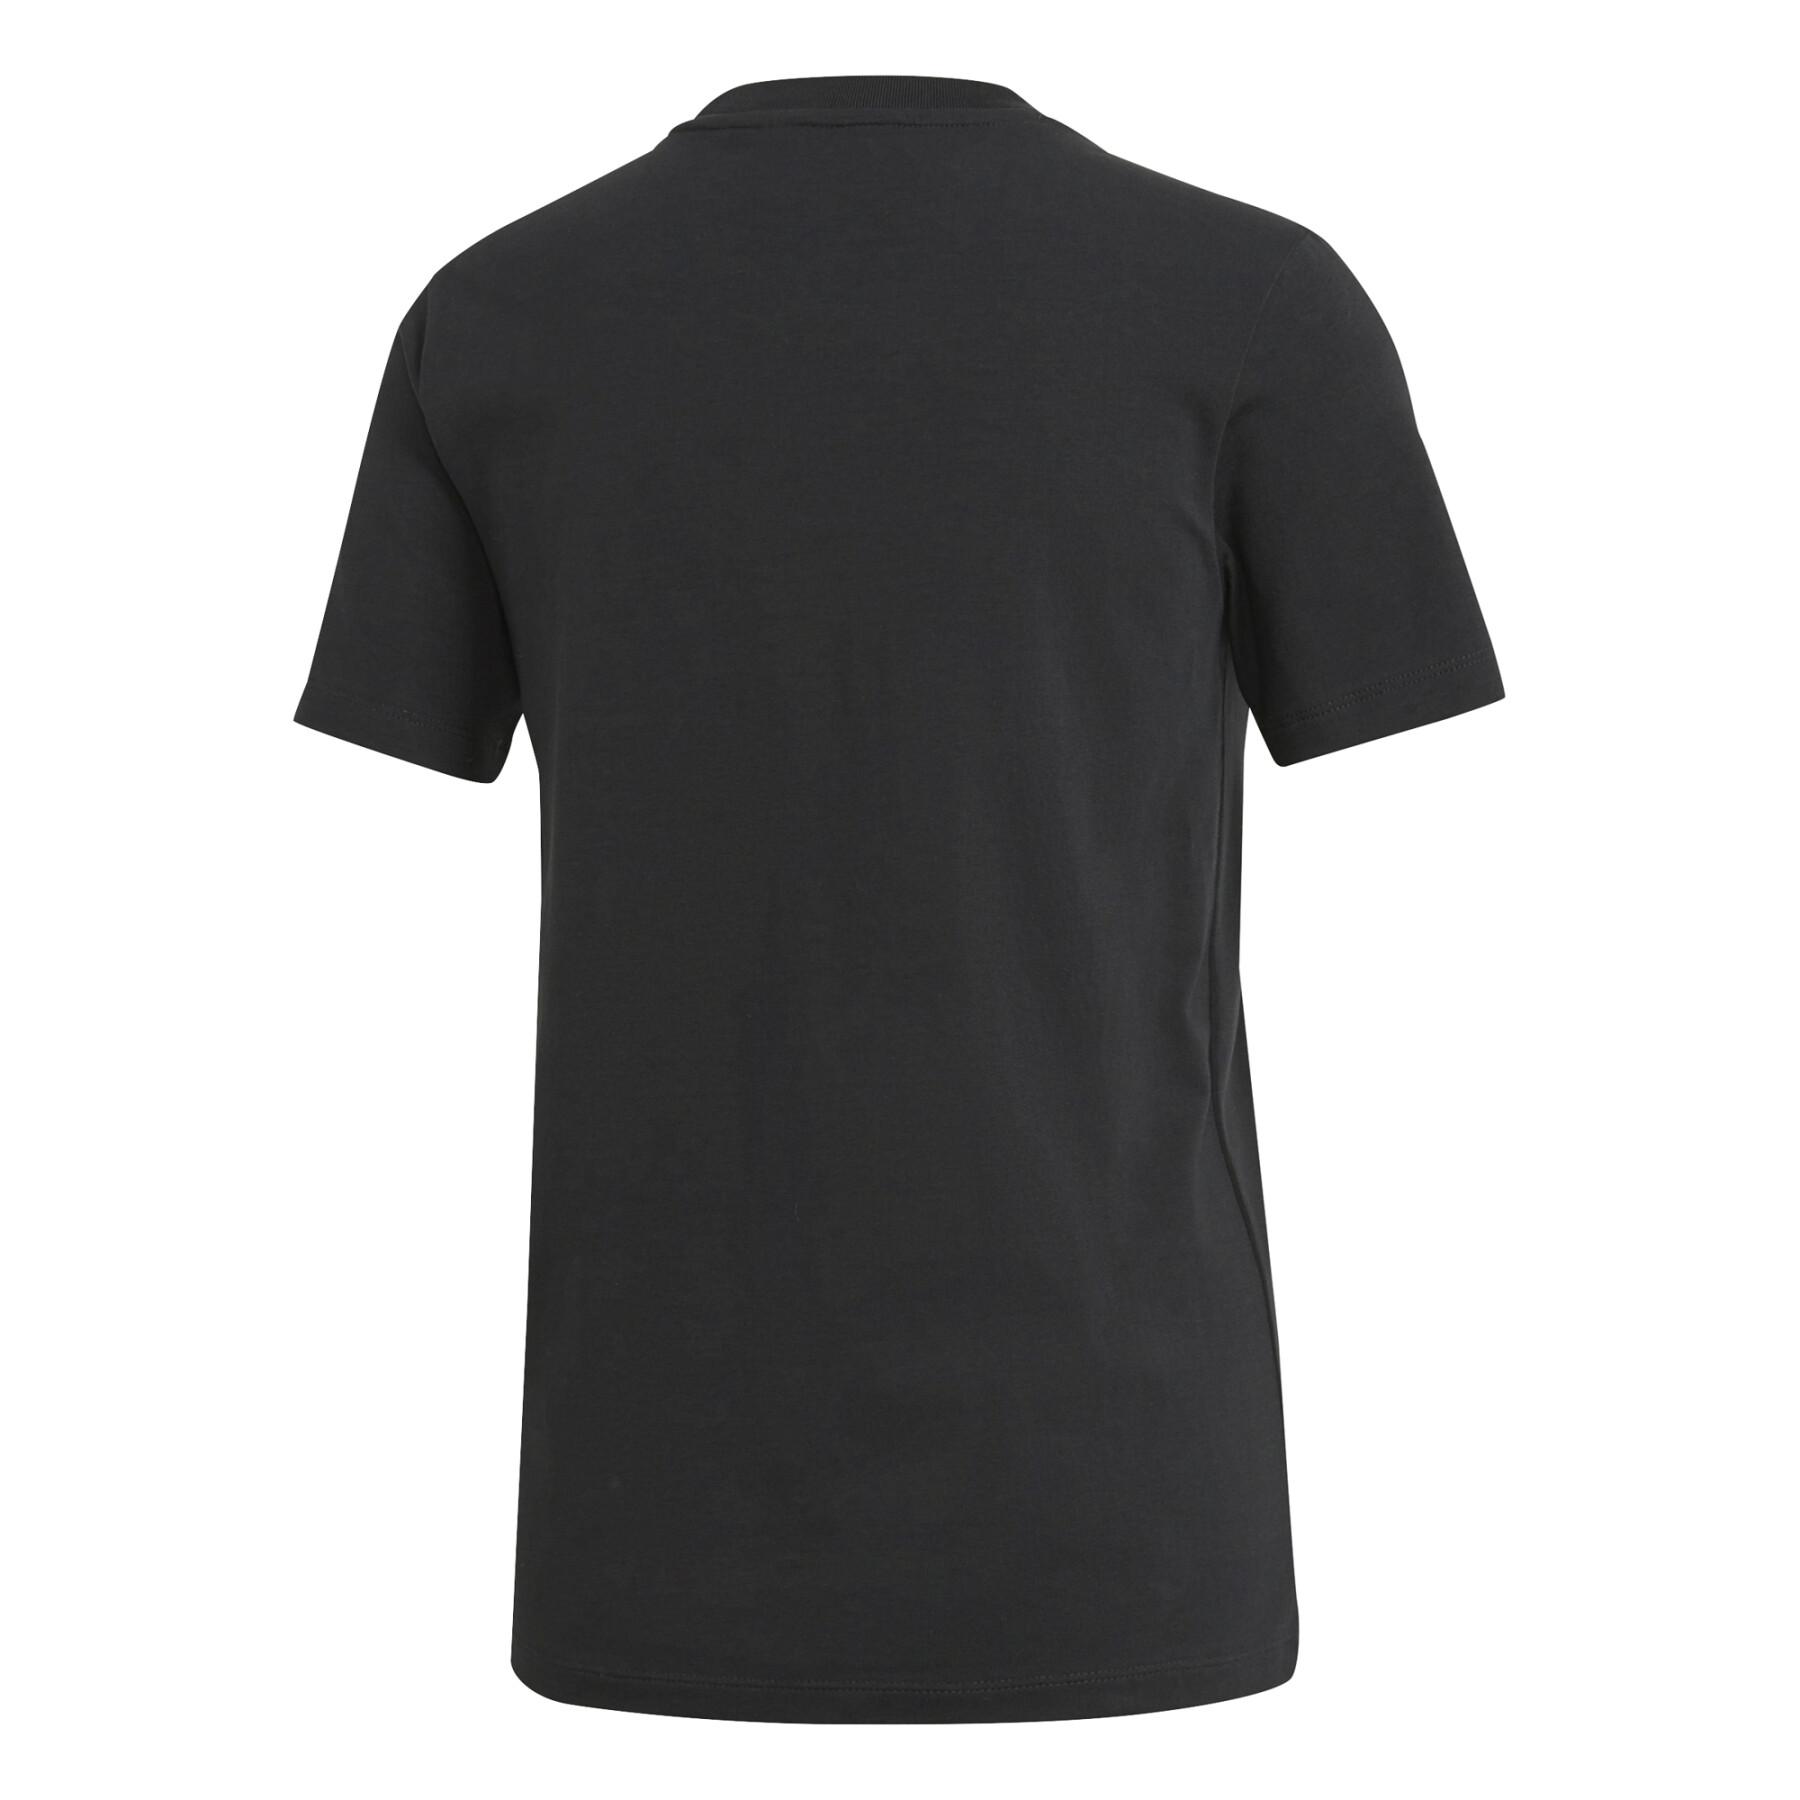 T-Shirt Frau adidas Trefoil maille jersey